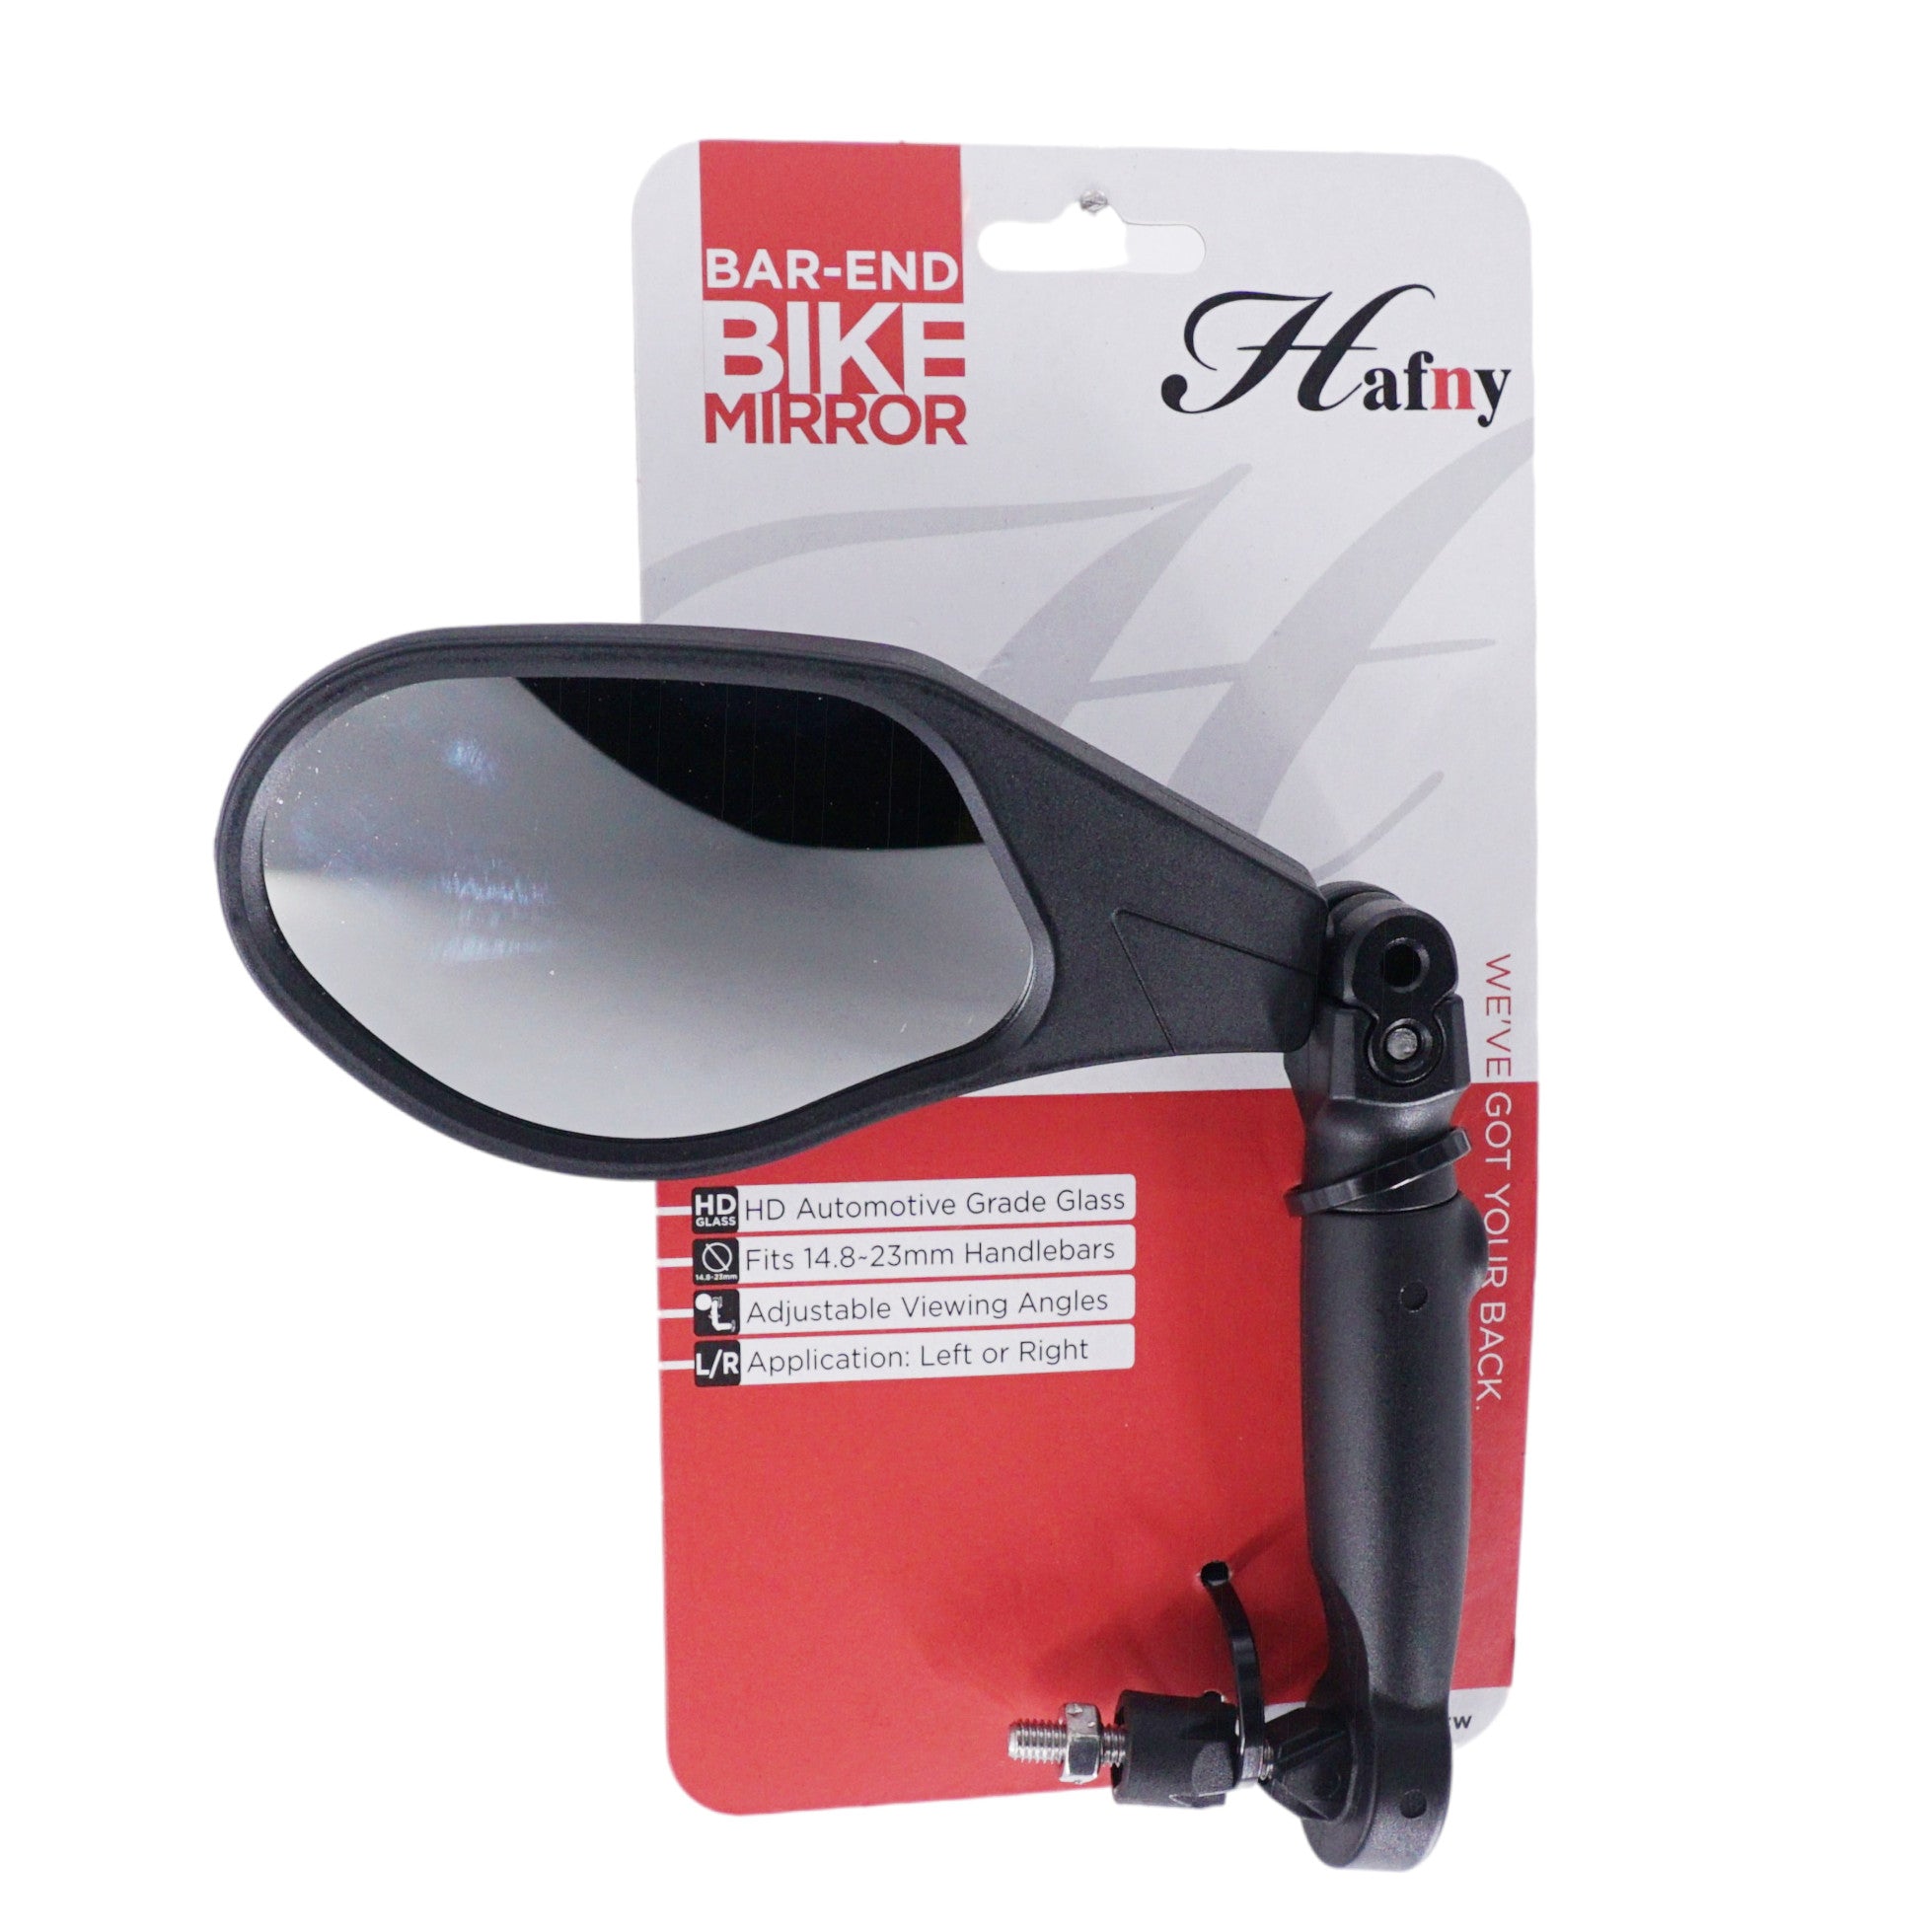 Hafny Universal Bar-End Mirror | The Bikesmiths